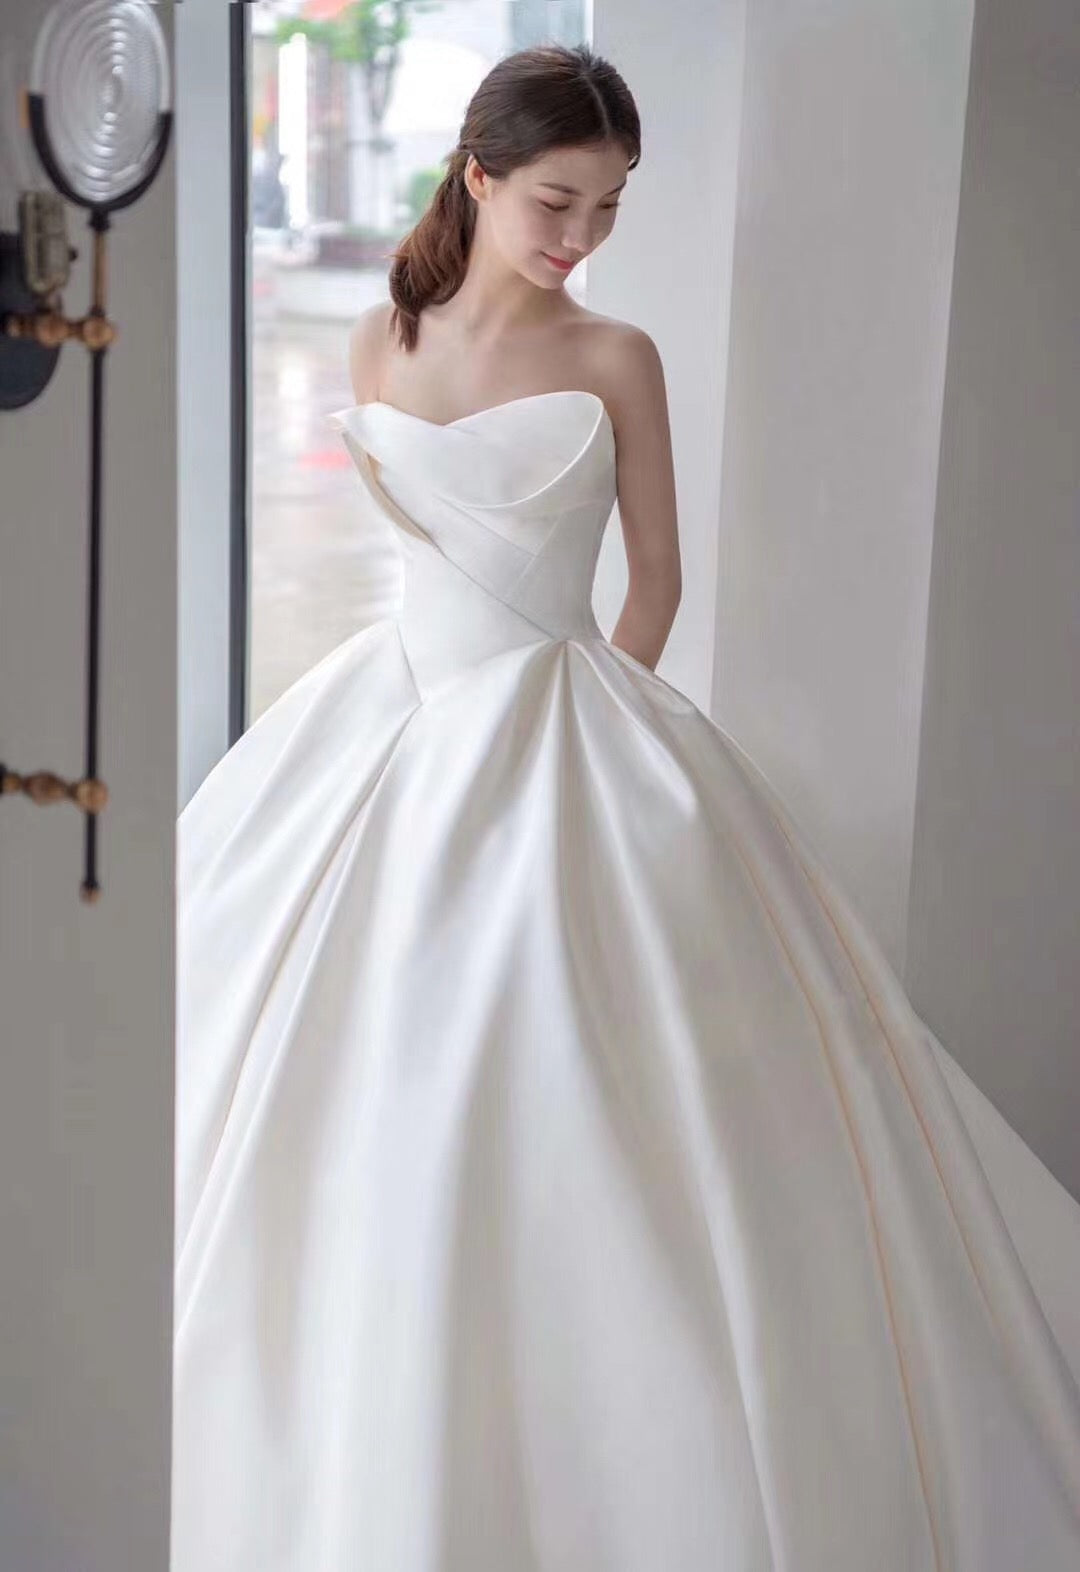 Strapless Popular Bridal Gowns, 2020 Newest Wedding Dresses, A-line Wedding Dresses